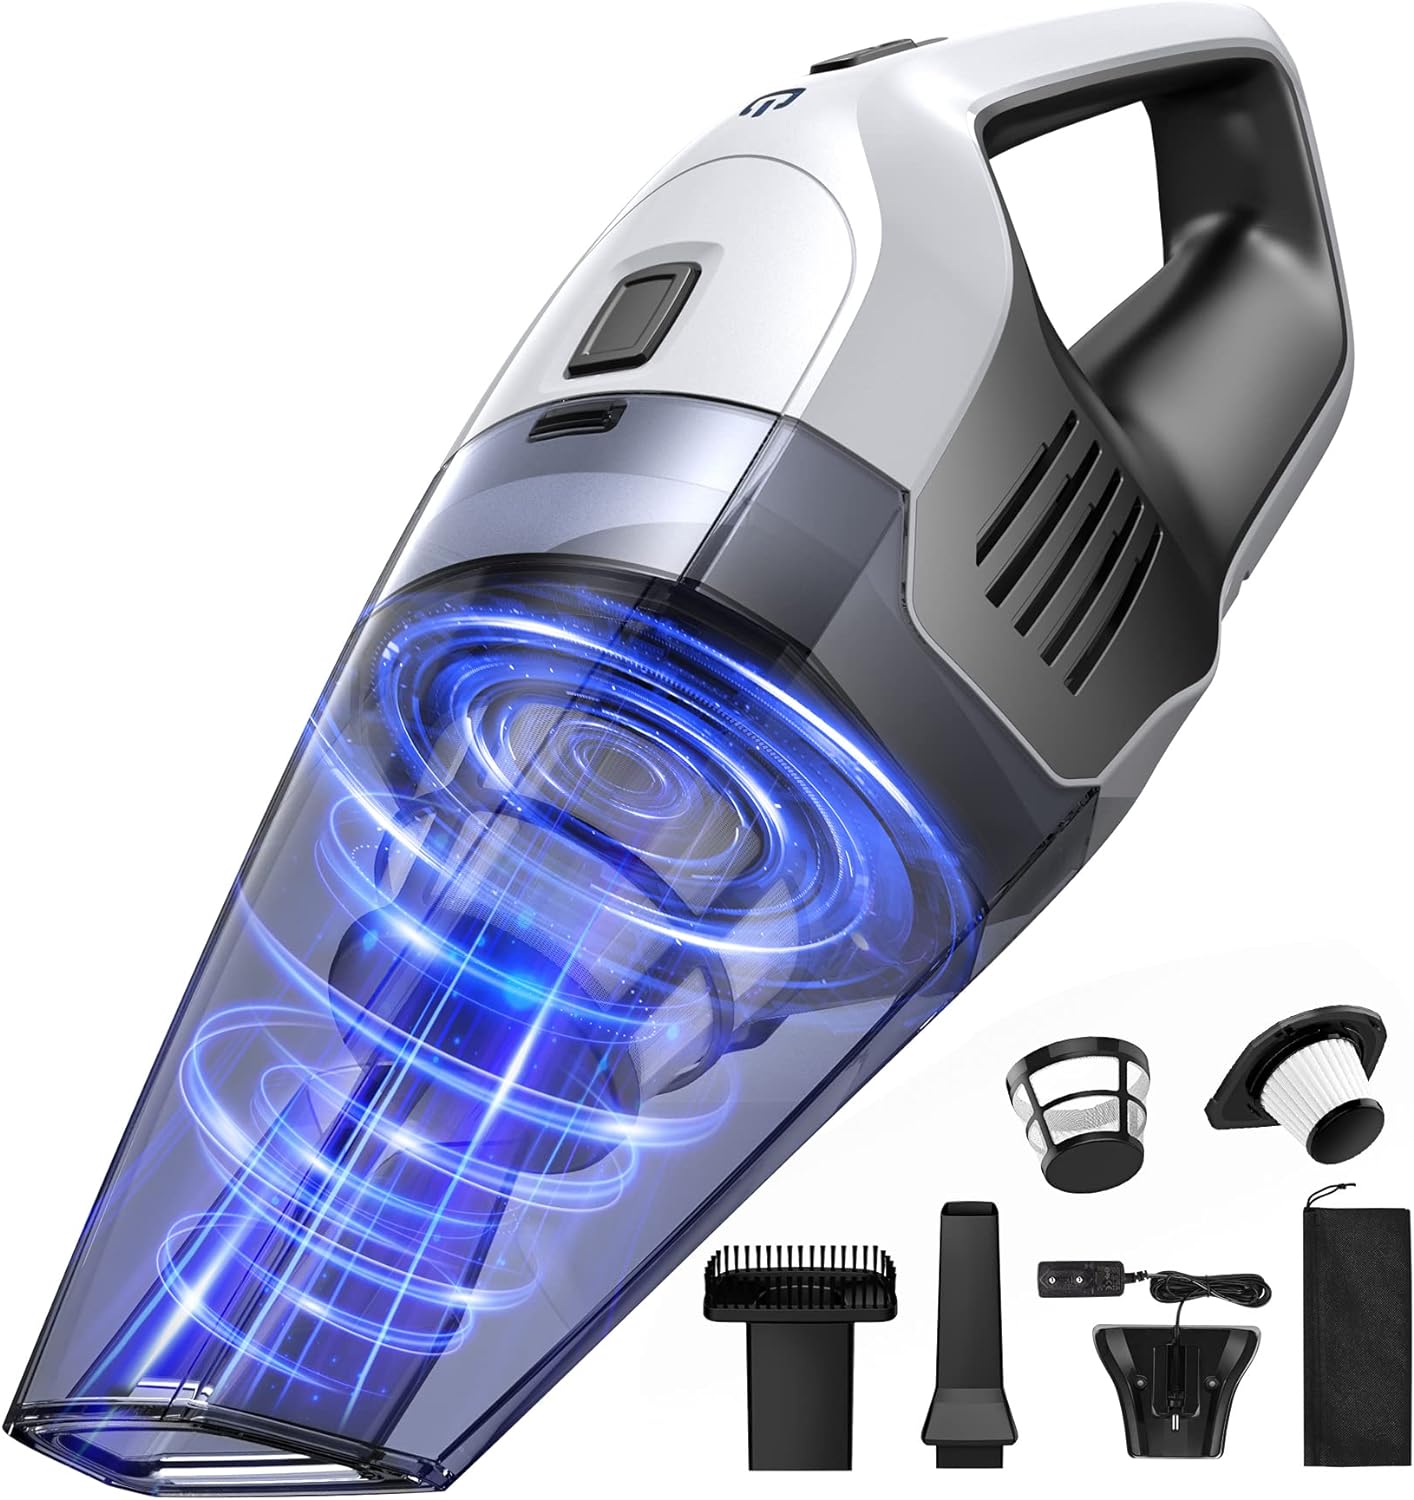 Powerful Handheld Vacuum Cleaner Review